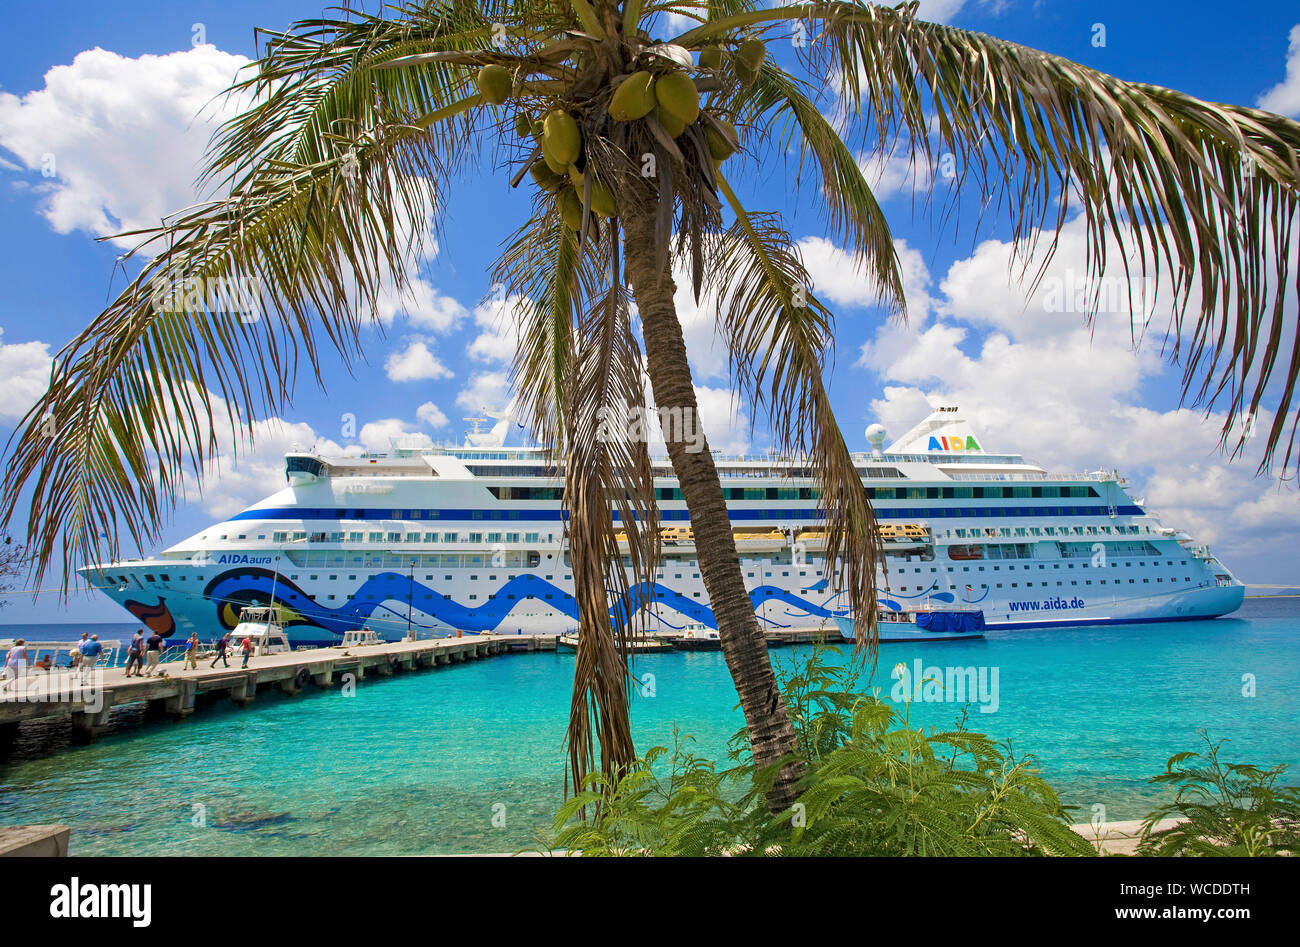 The german cruise ship 'AIDA aura' at Kralendijk, Bonaire, Netherland Antilles Stock Photo